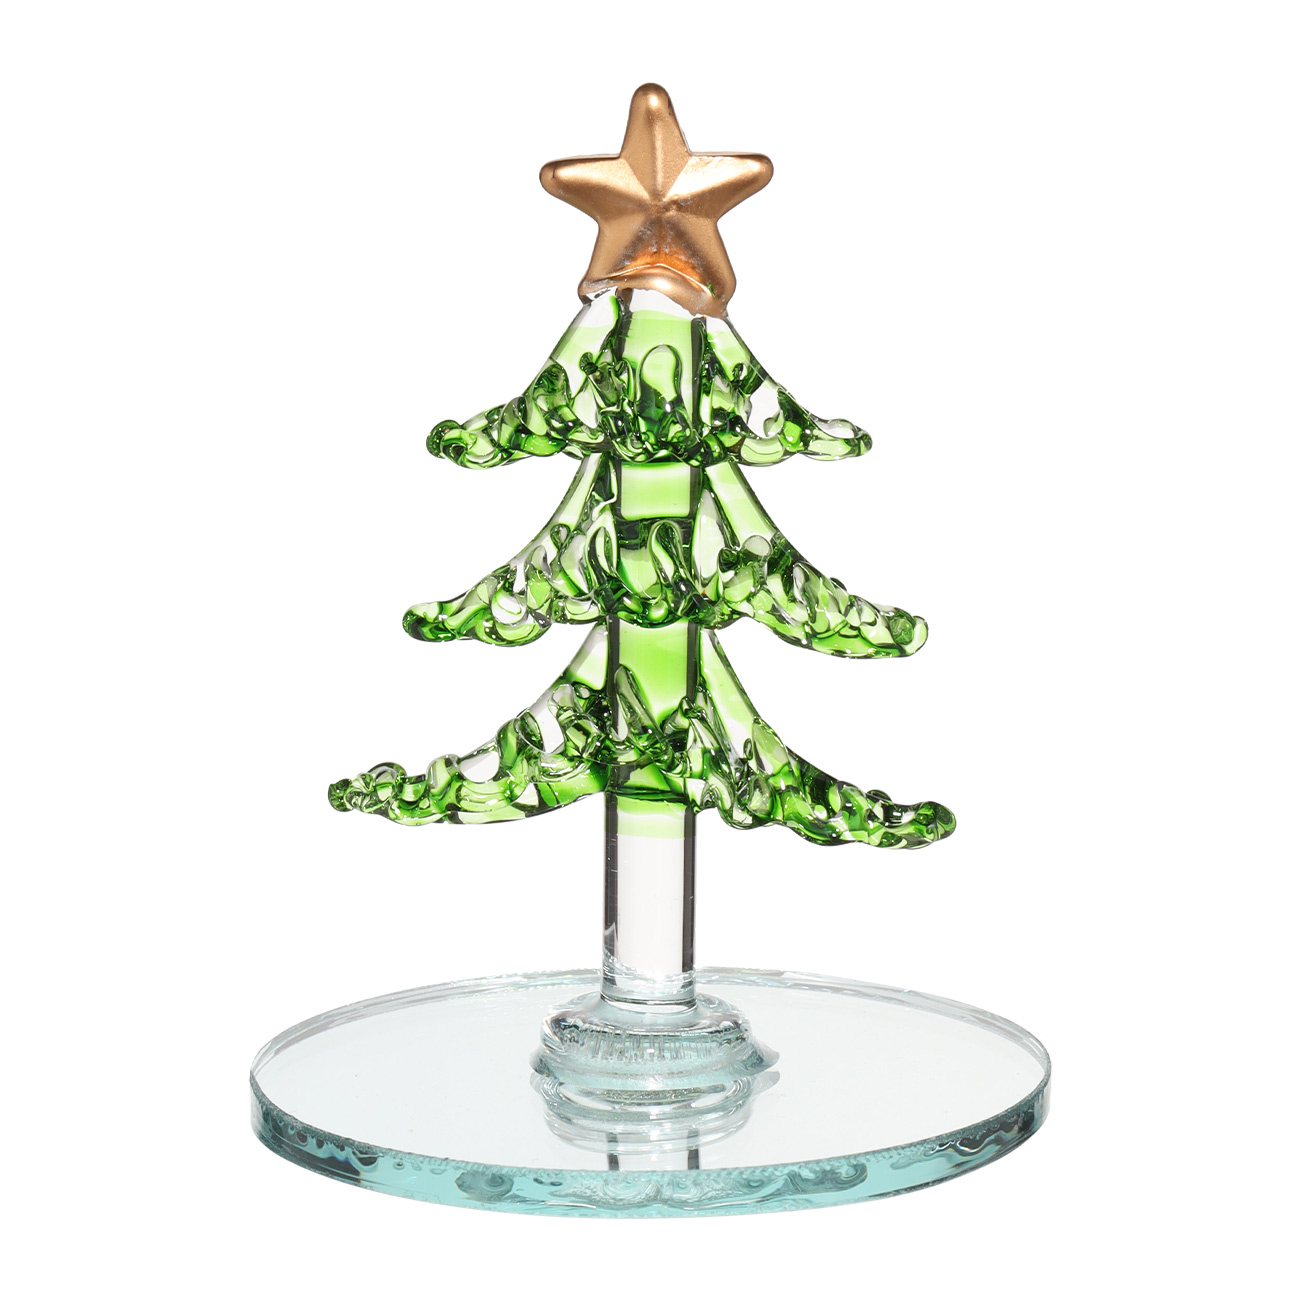 Статуэтка, 9 см, стекло, зеленая, Елка со звездой, Christmas classic - фото 1